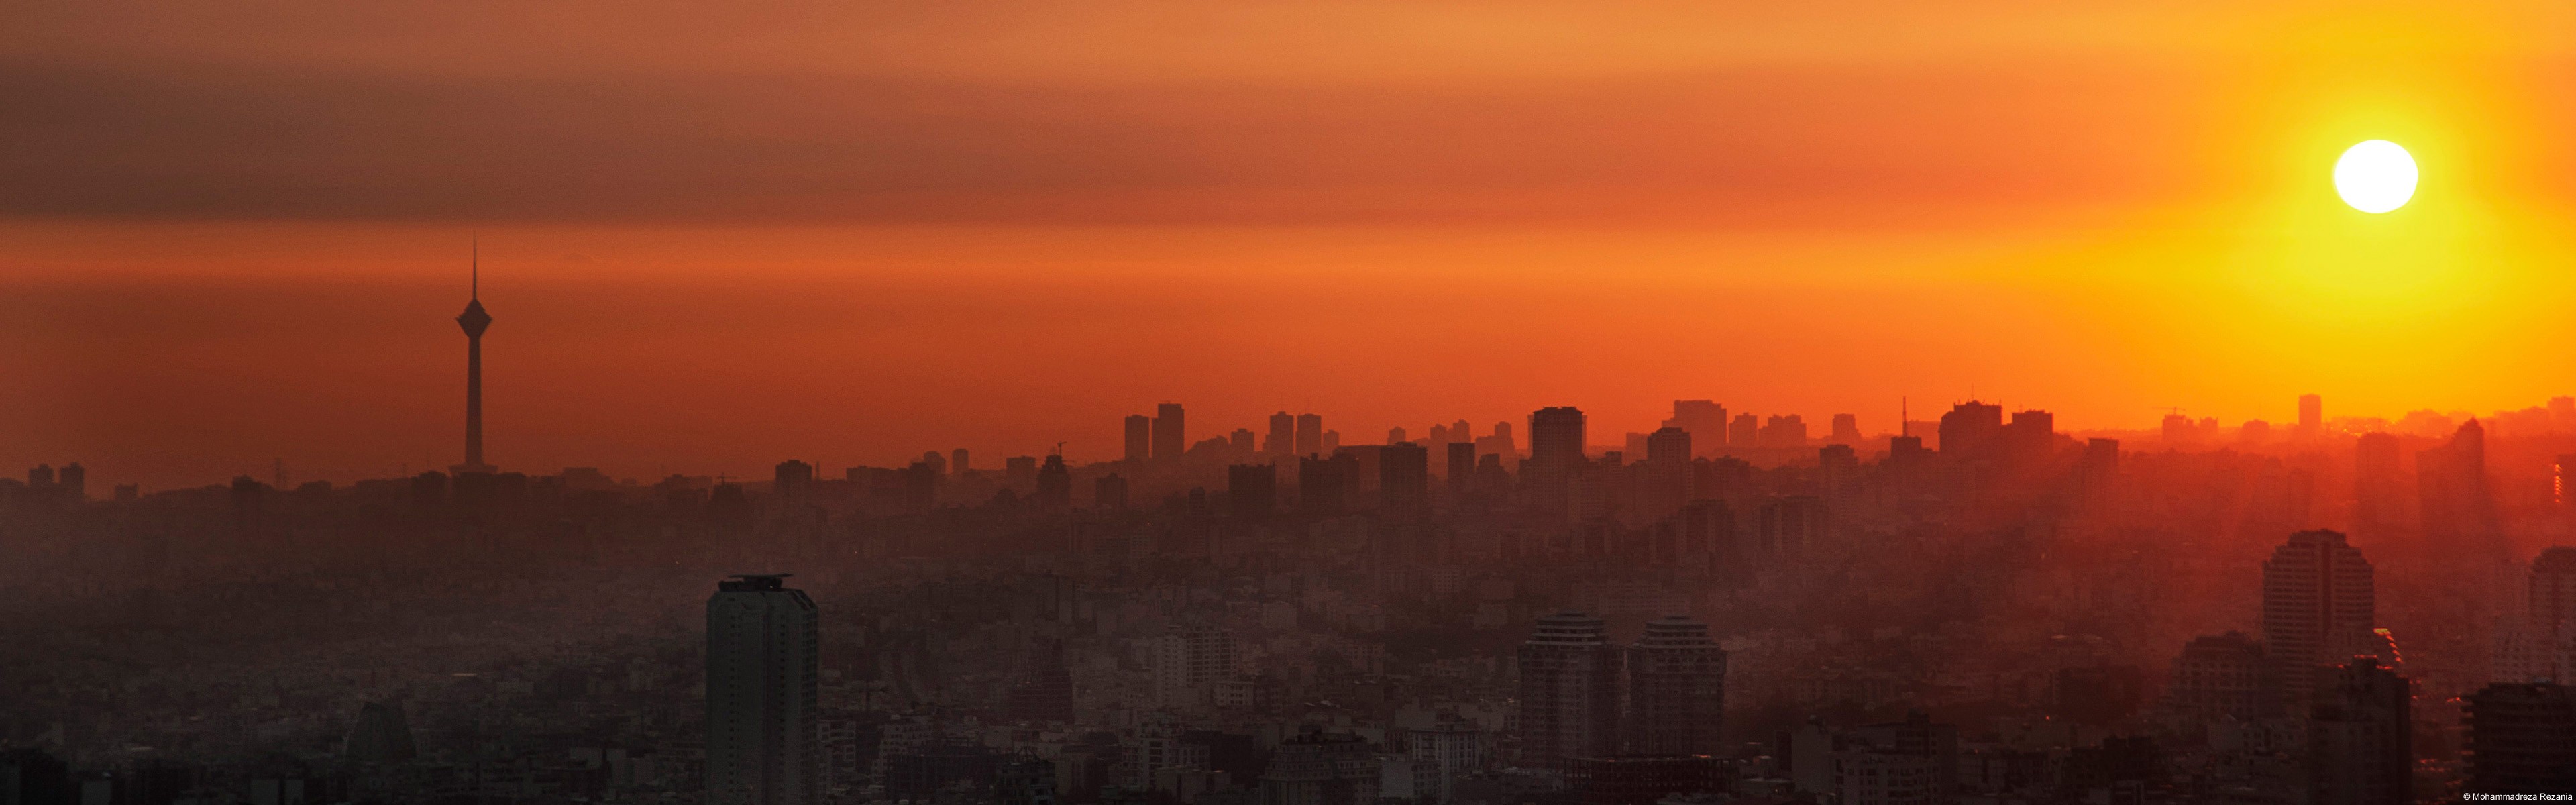 Iran Tehran City Tower Sunset 3840x1200